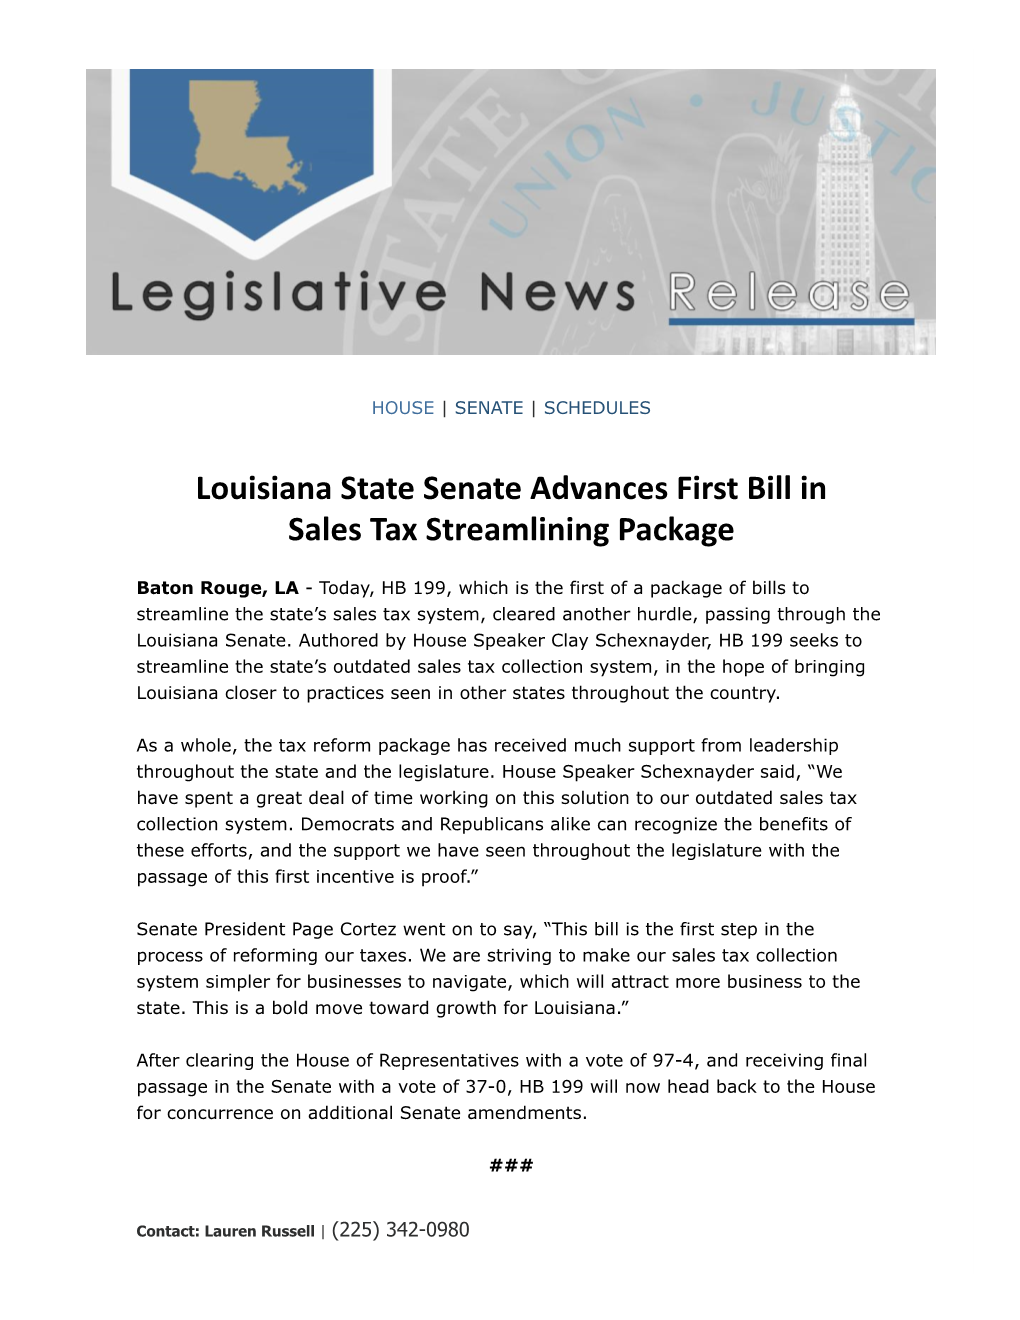 Louisiana State Senate Advances First Bill in Sales Tax Streamlining Package